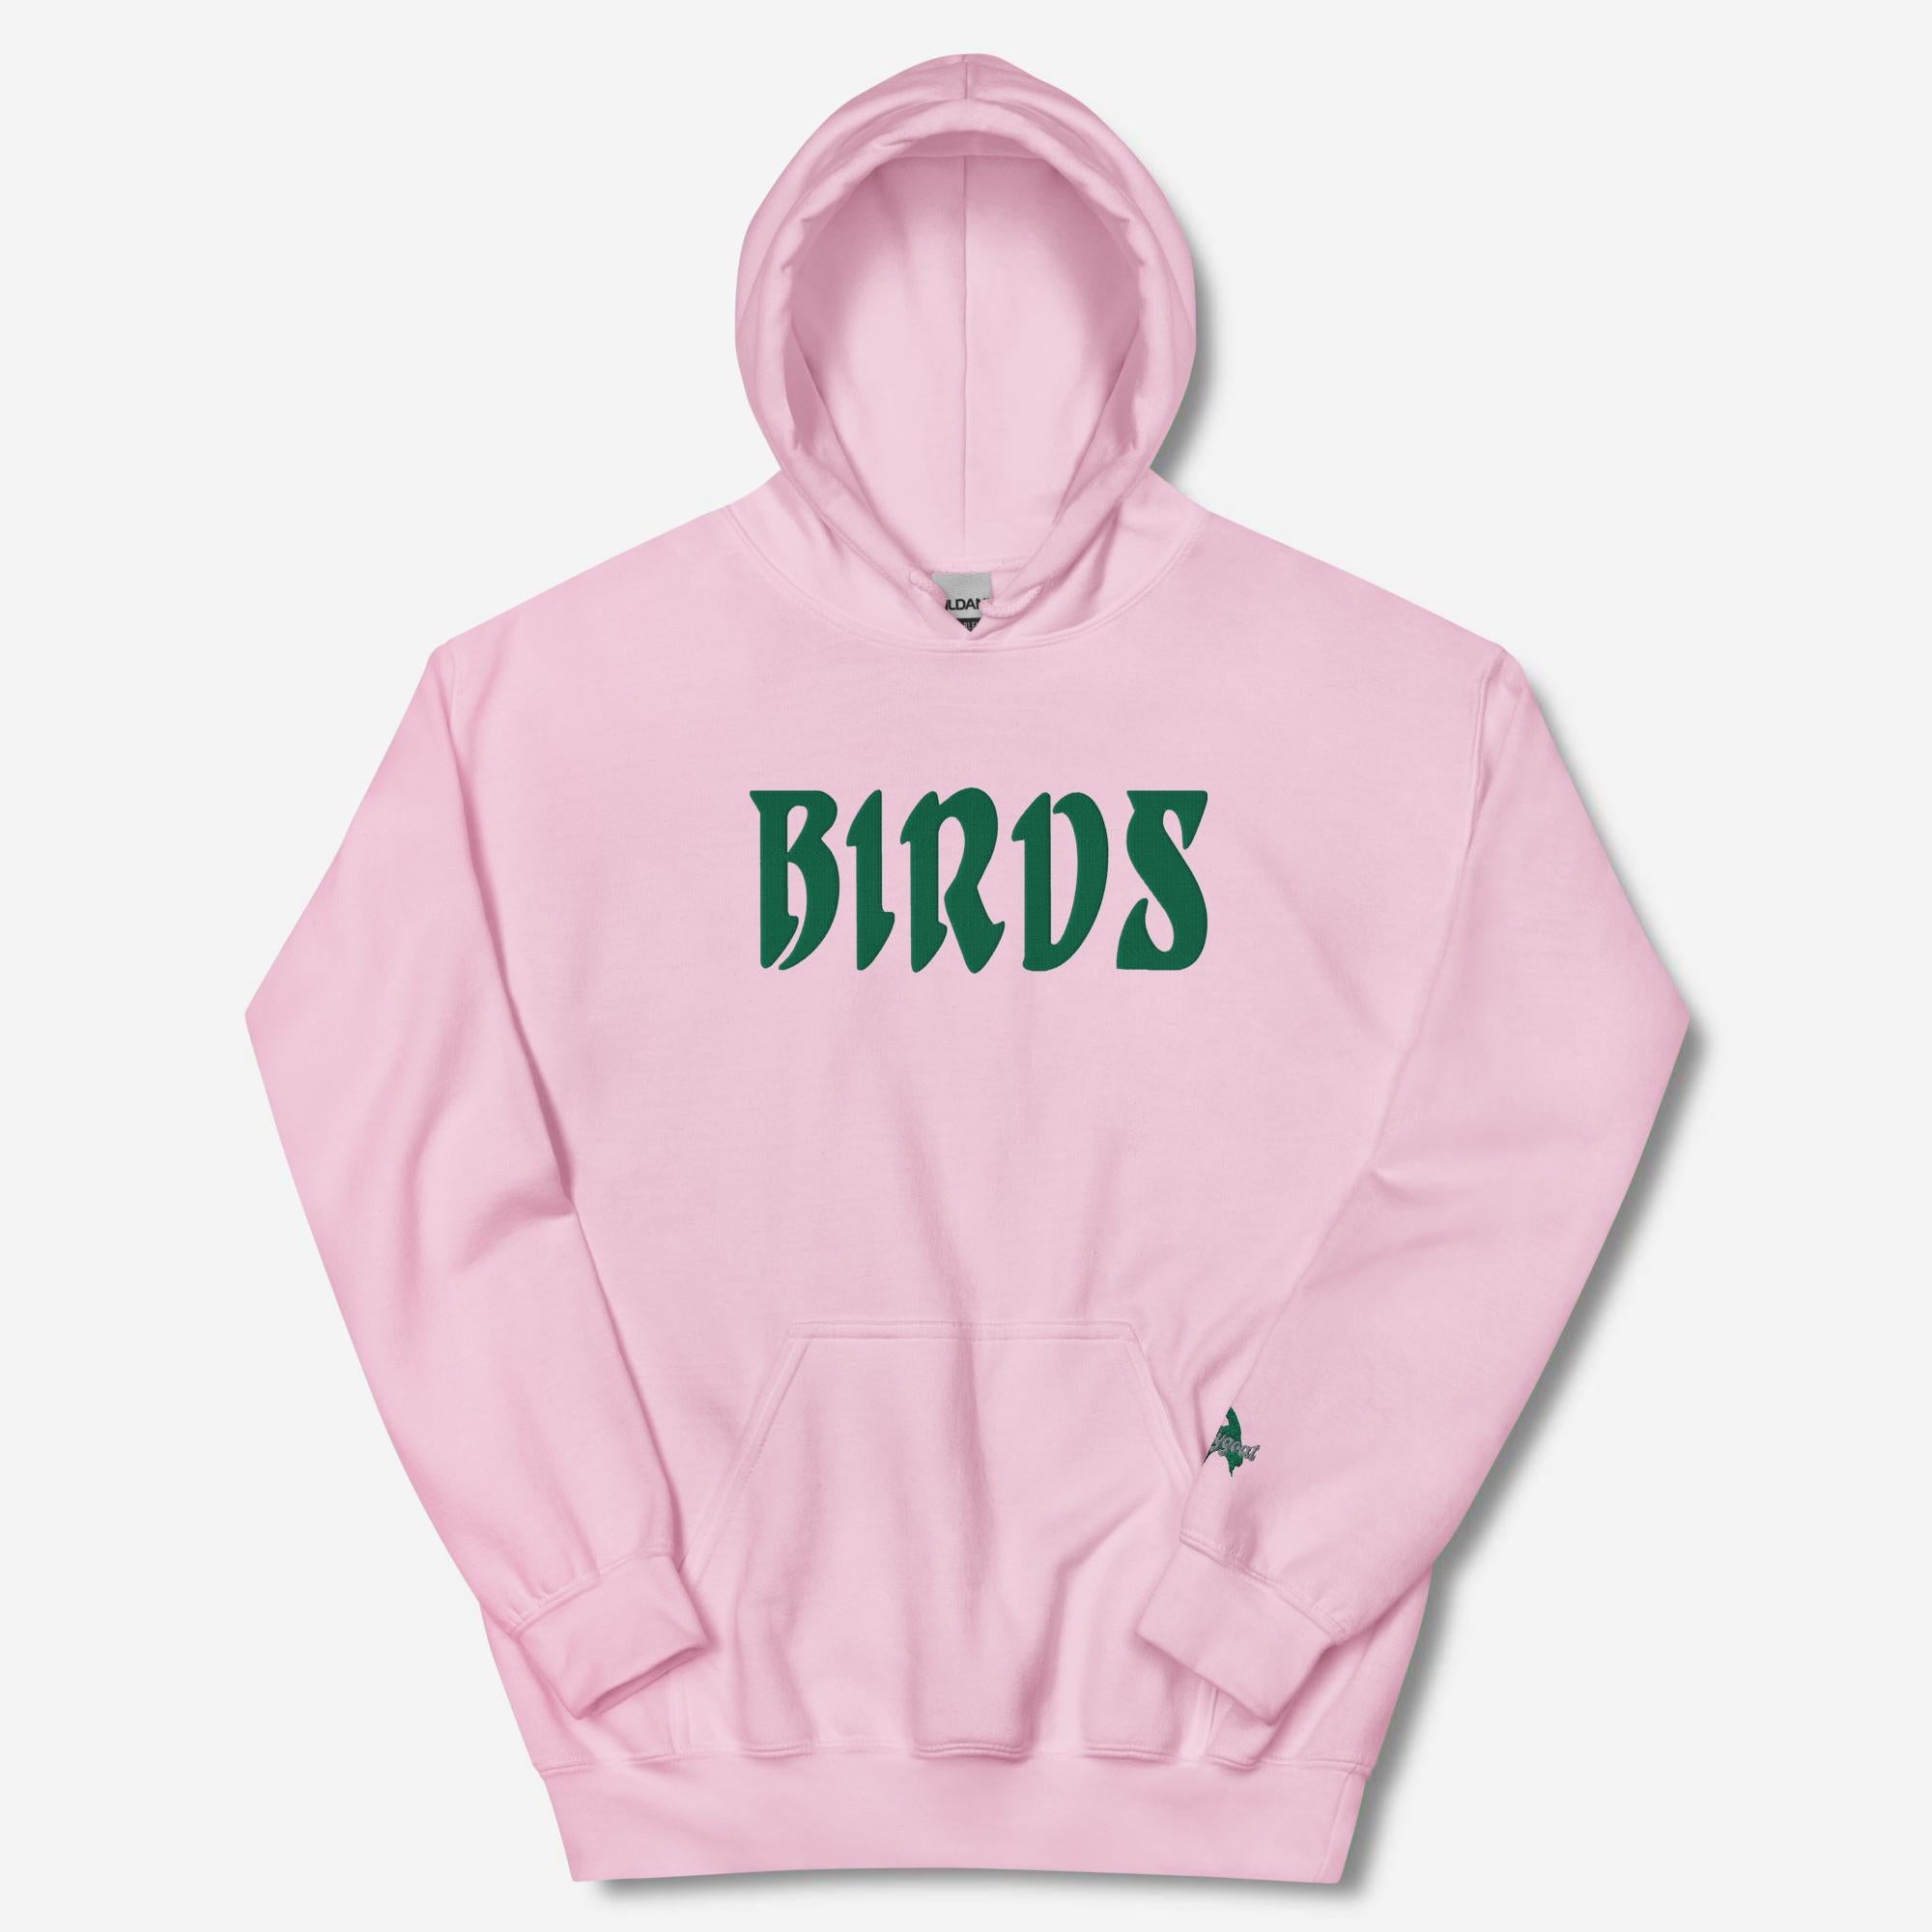 "BIRDS" Emboidered Hoodie